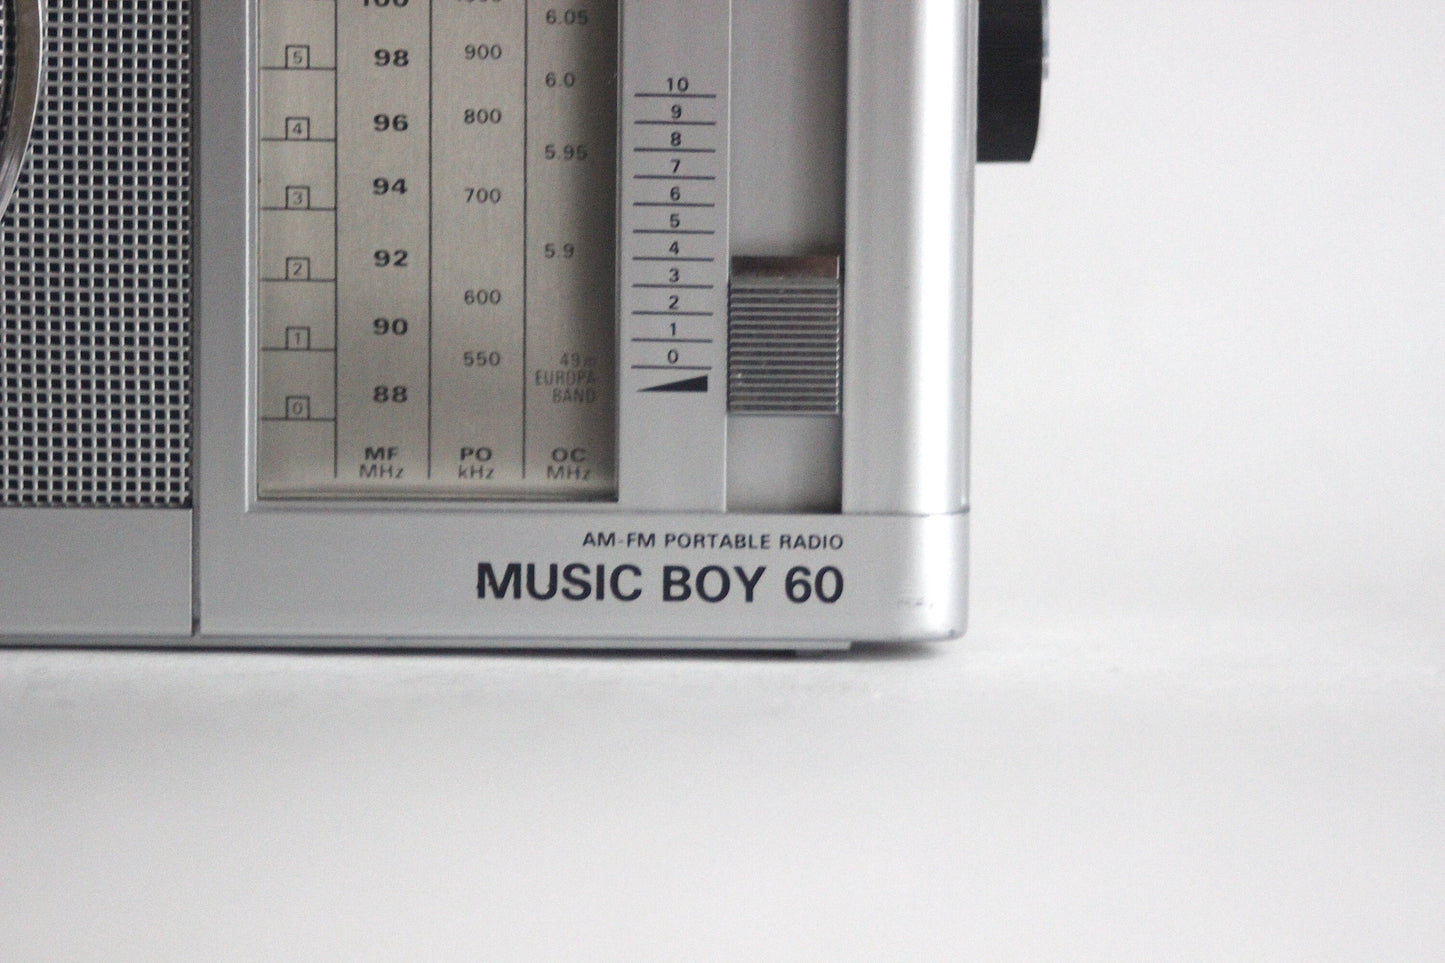 GRUNDIG Music Boy 60 portable radio. Germany 1983.